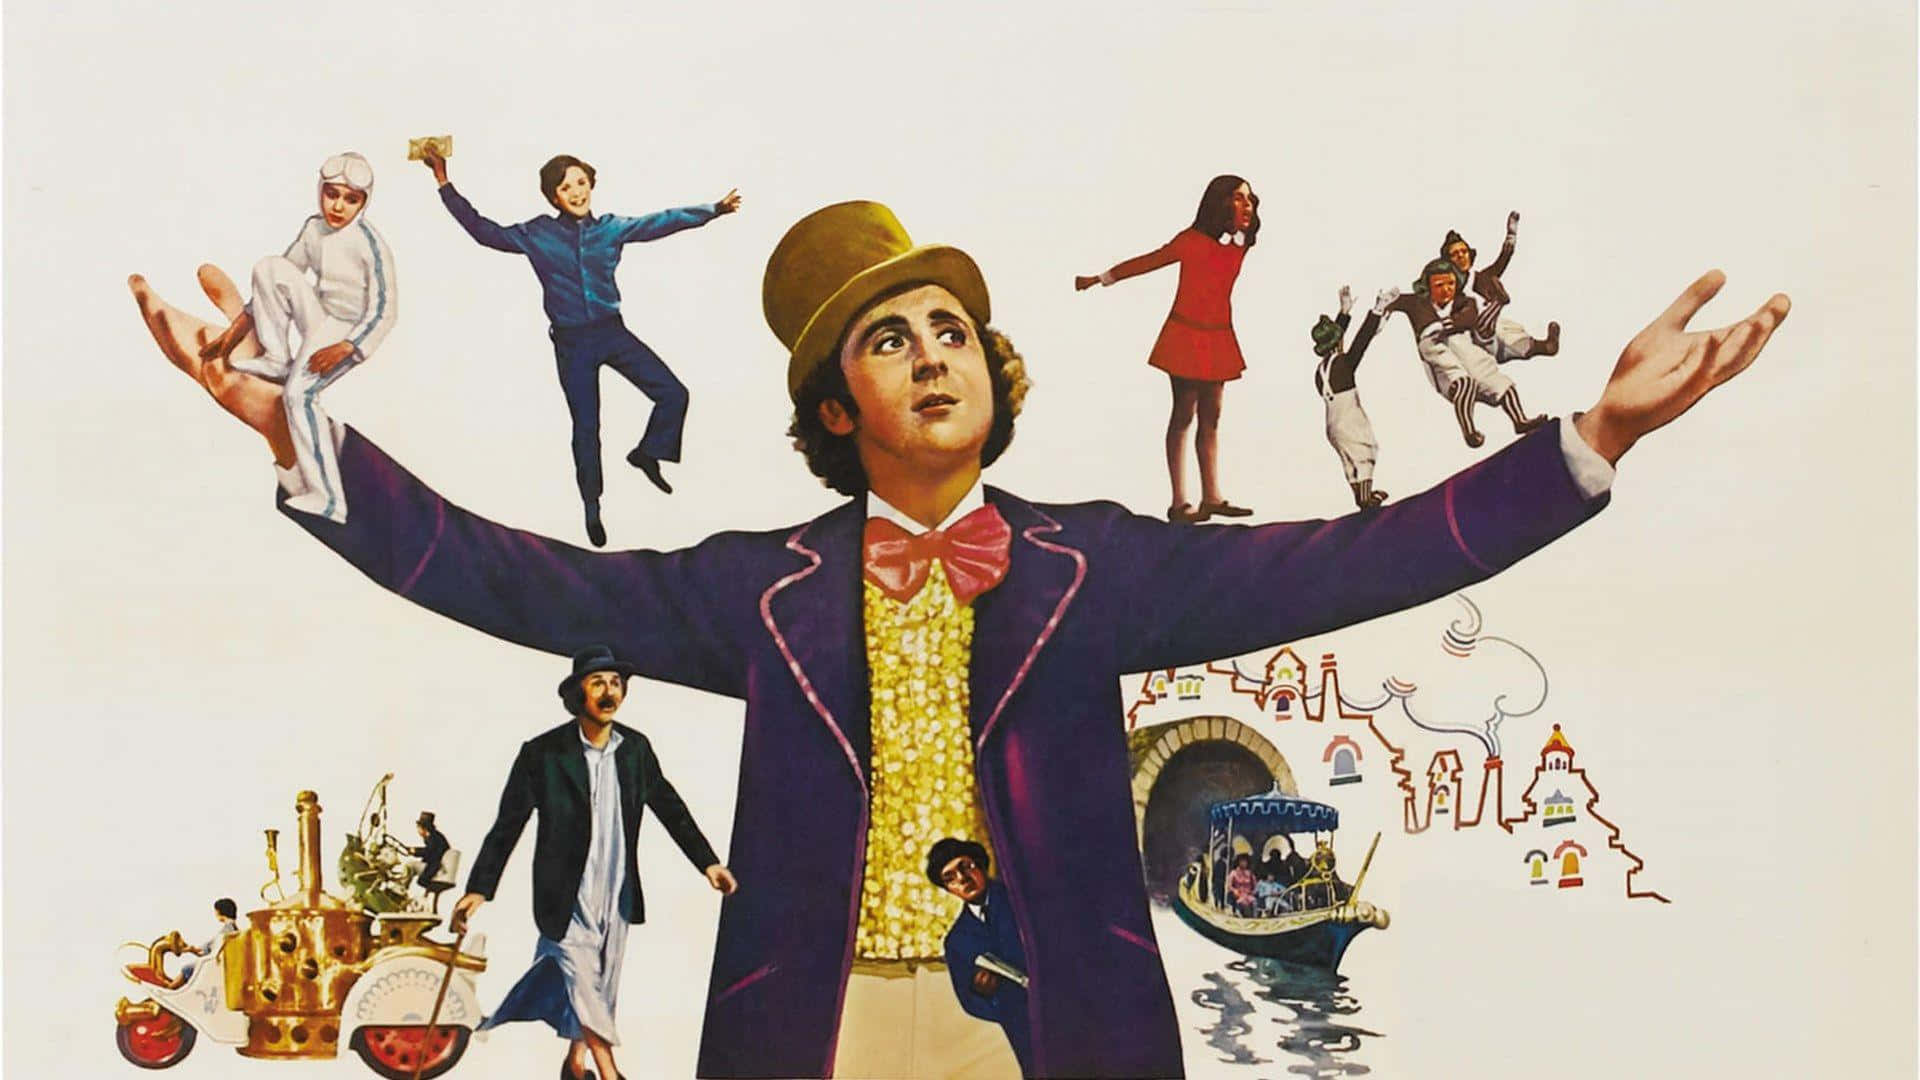 Willy Wonka Classic Movie Artwork Wallpaper